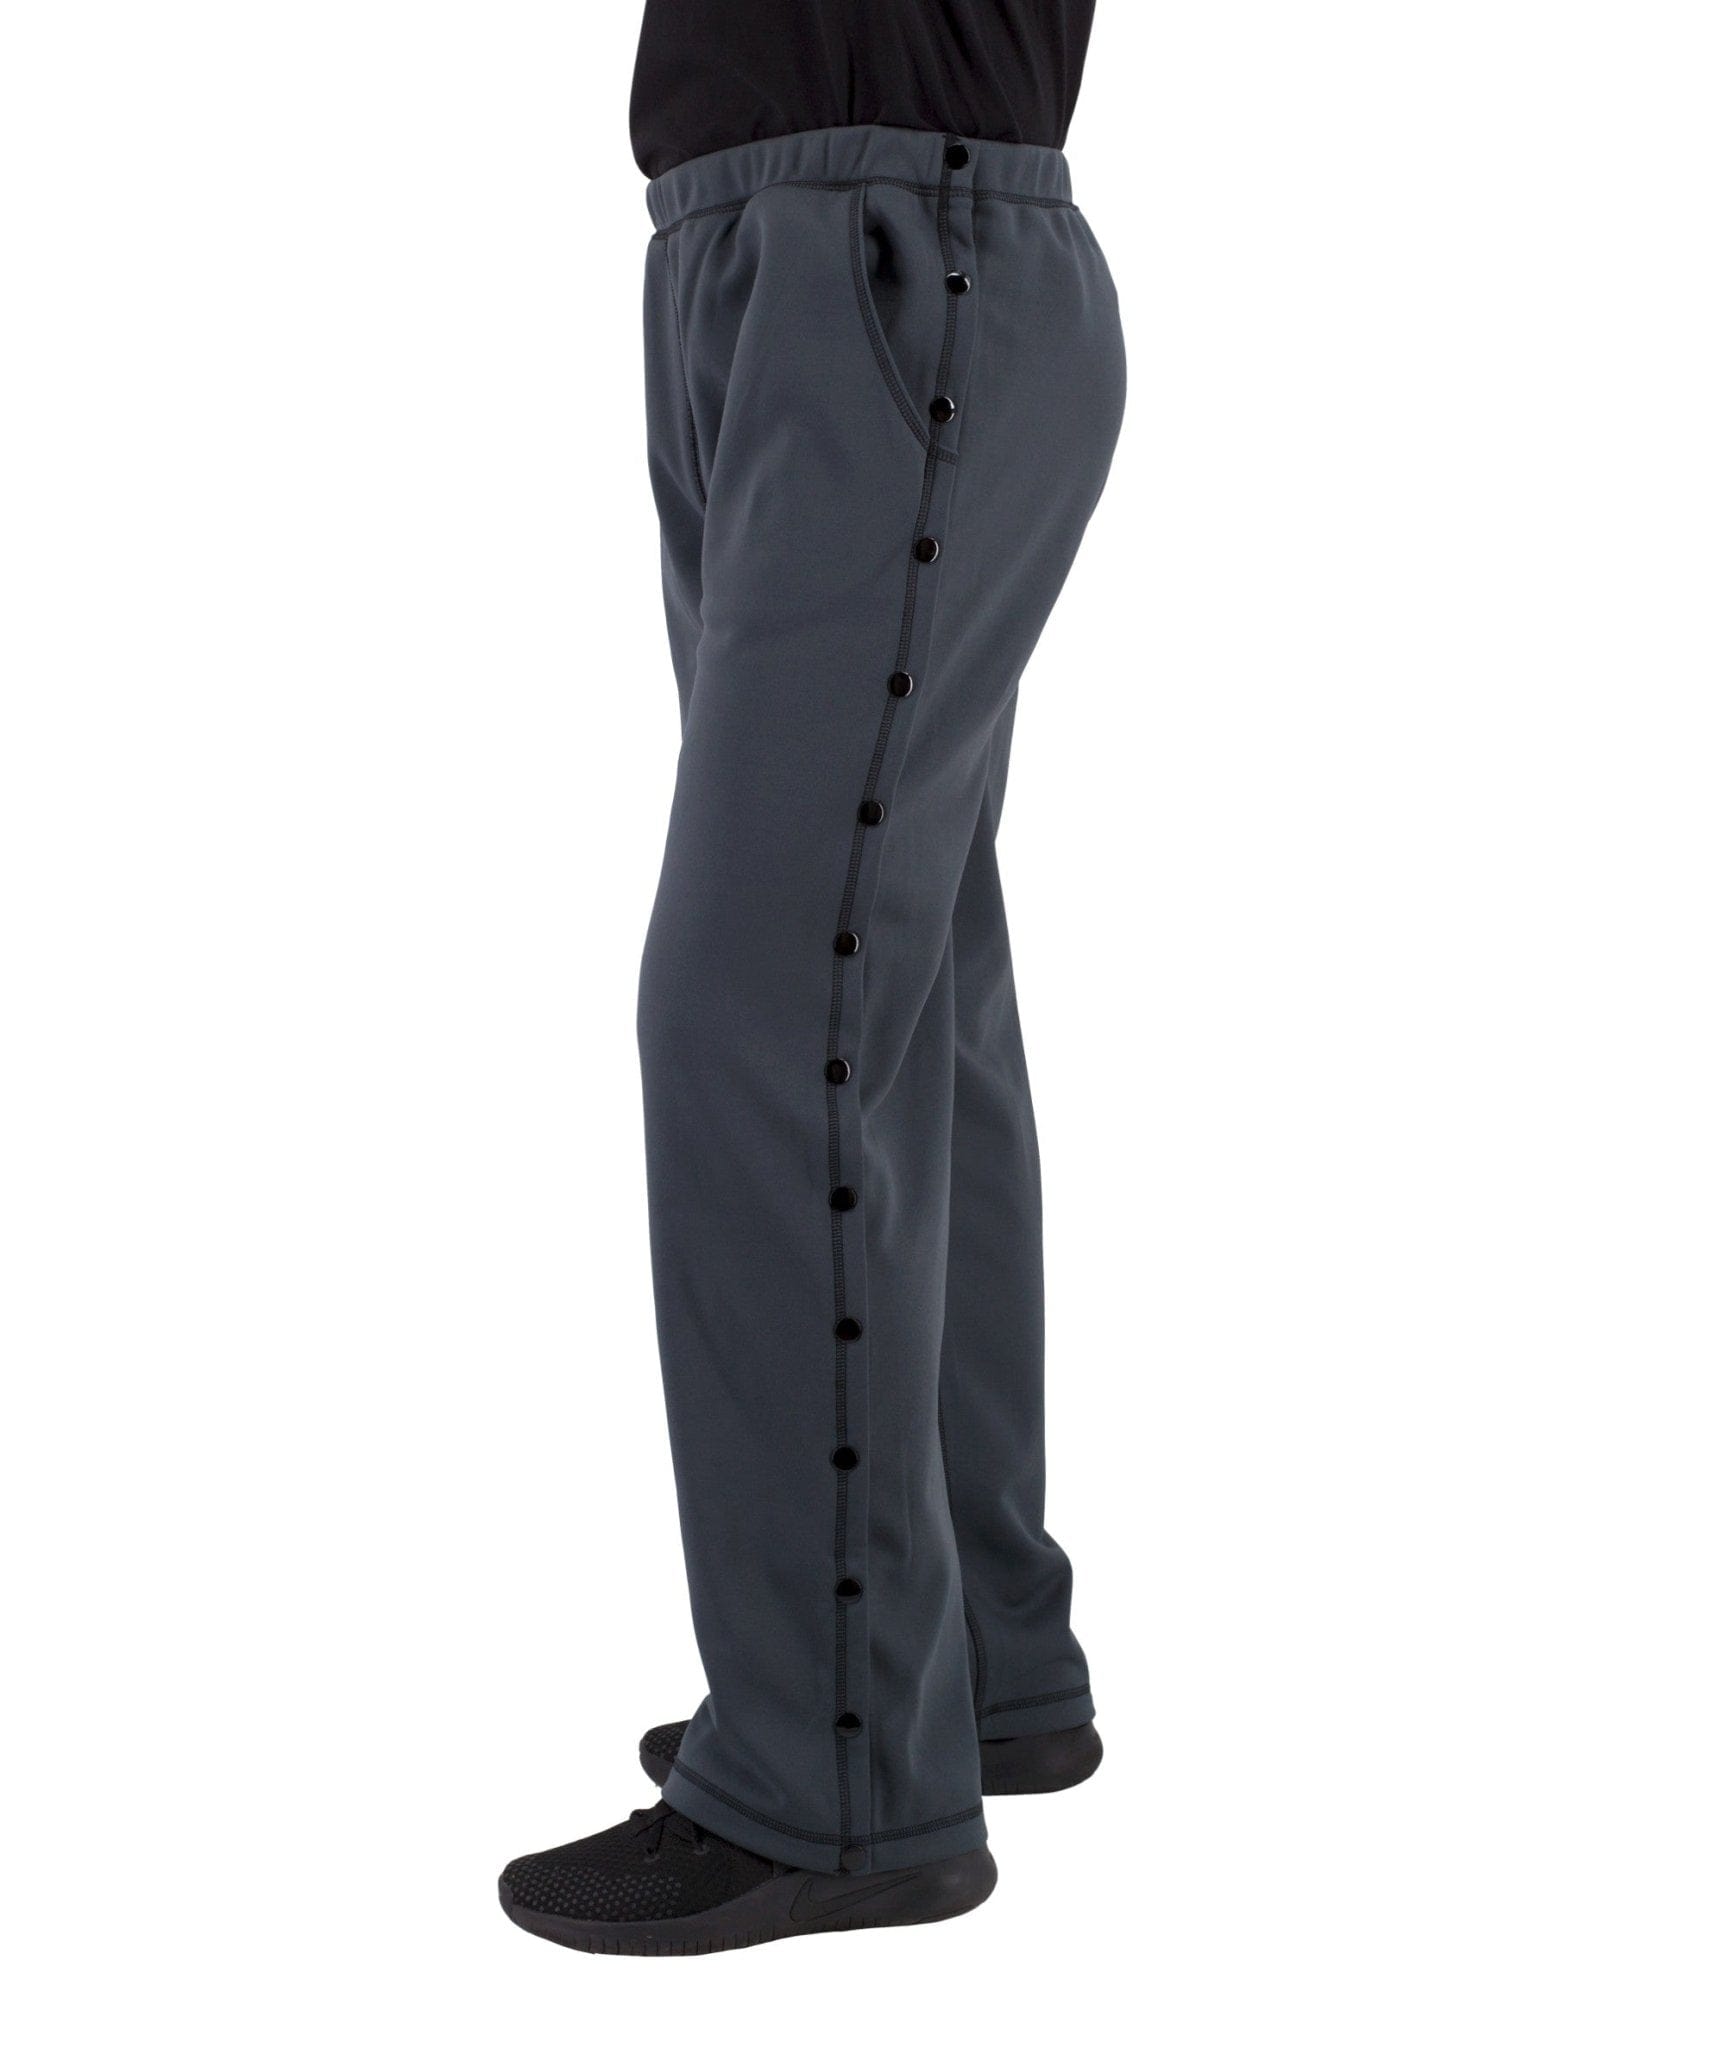 Post Surgery Tearaway Pants - Men's - Women's - Unisex Sizing Renova Medical Wear